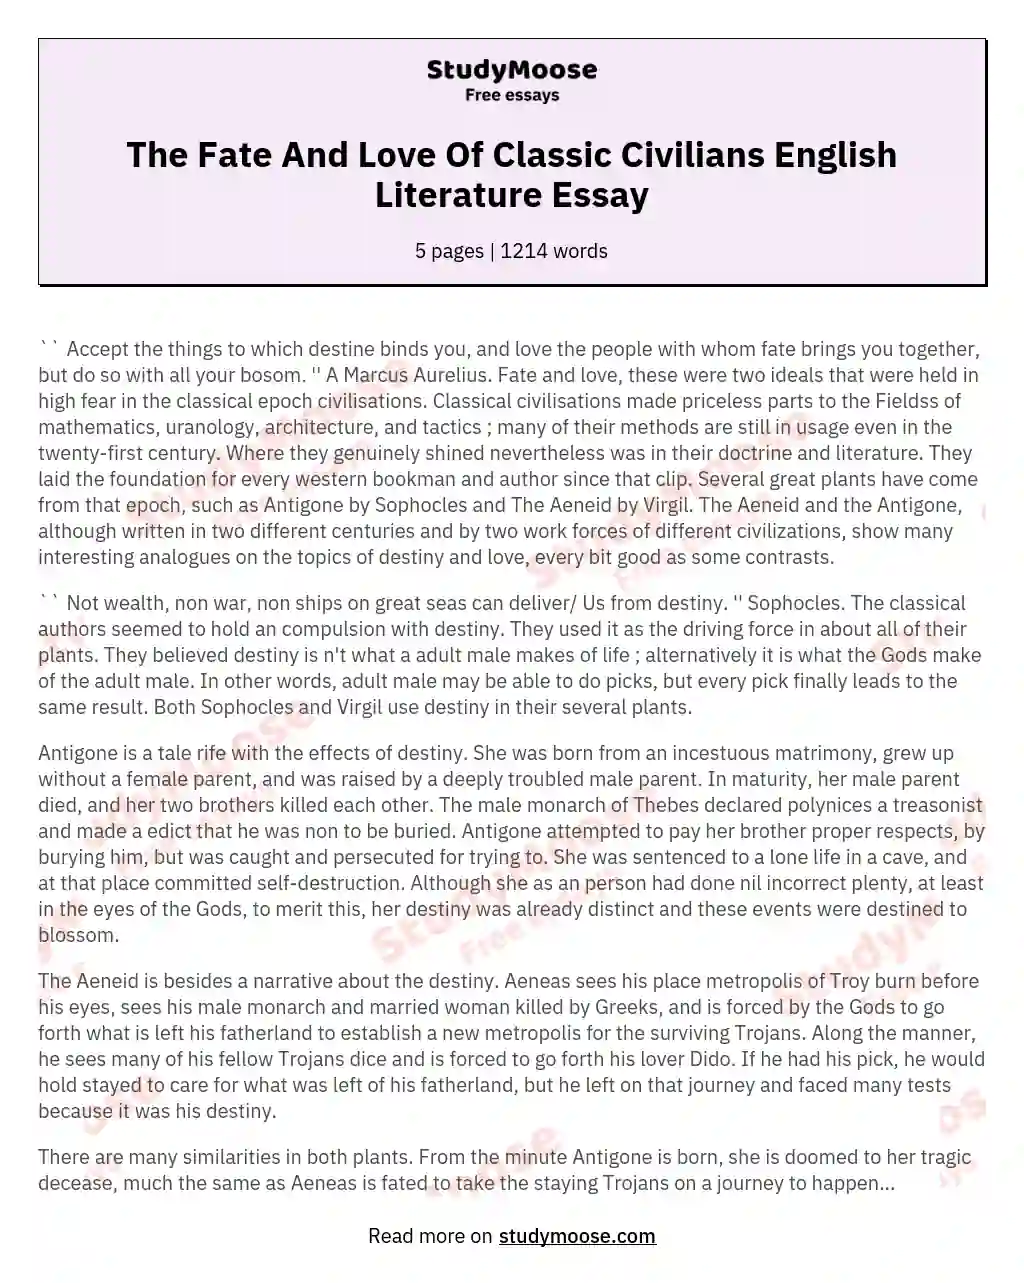 The Fate And Love Of Classic Civilians English Literature Essay essay